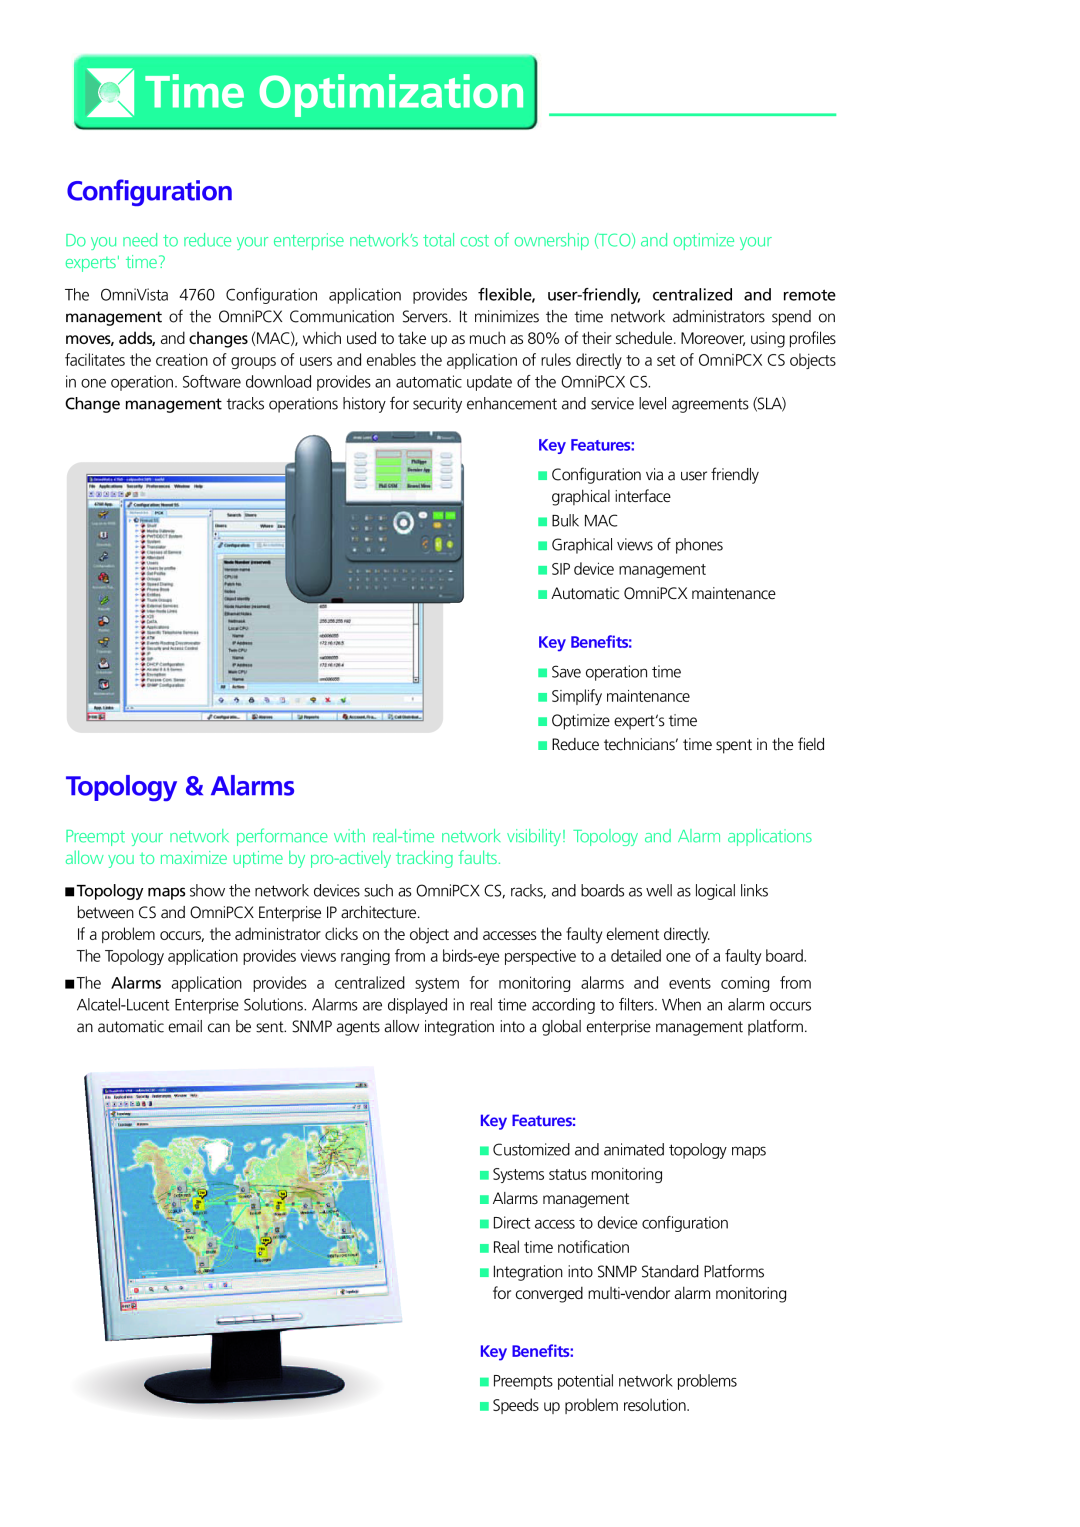 Alcatel-Lucent 4760 manual Time Optimization, Configuration, Topology & Alarms 